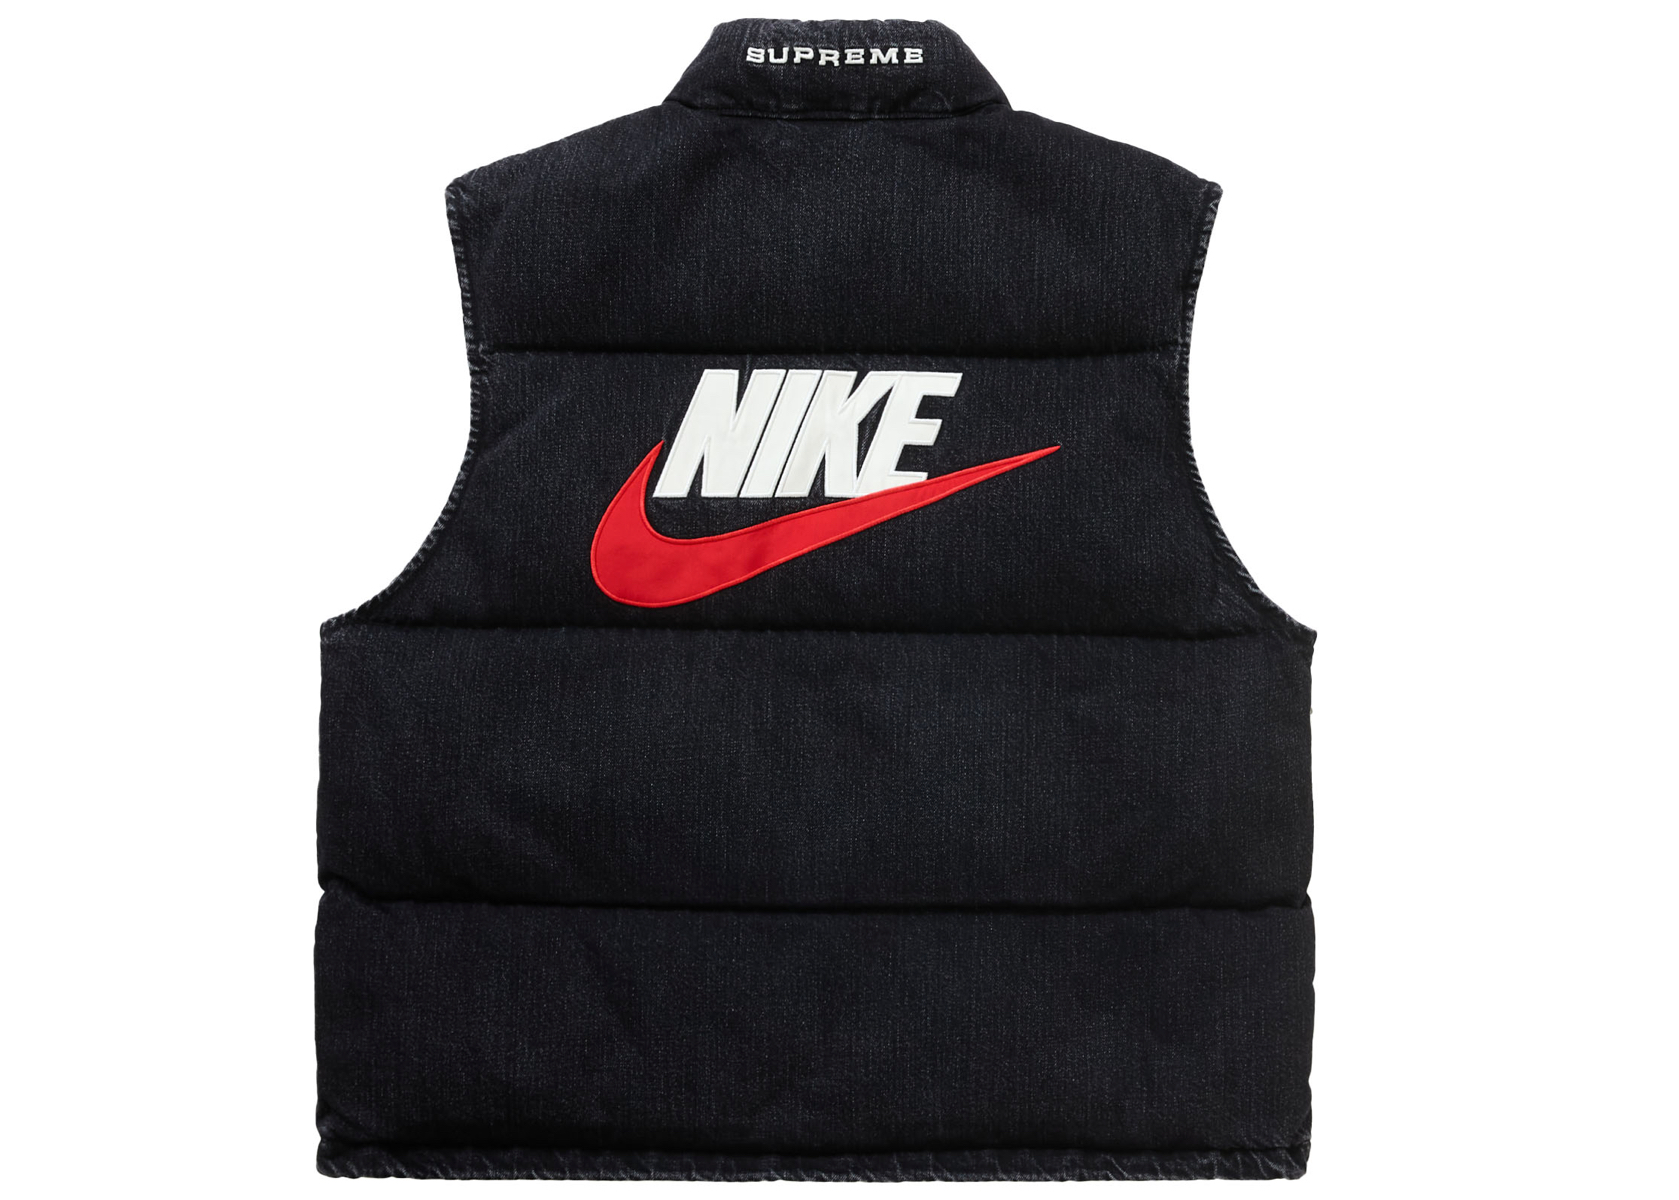 supremenycSupreme x Nike Denim Puffer Vest Indigo